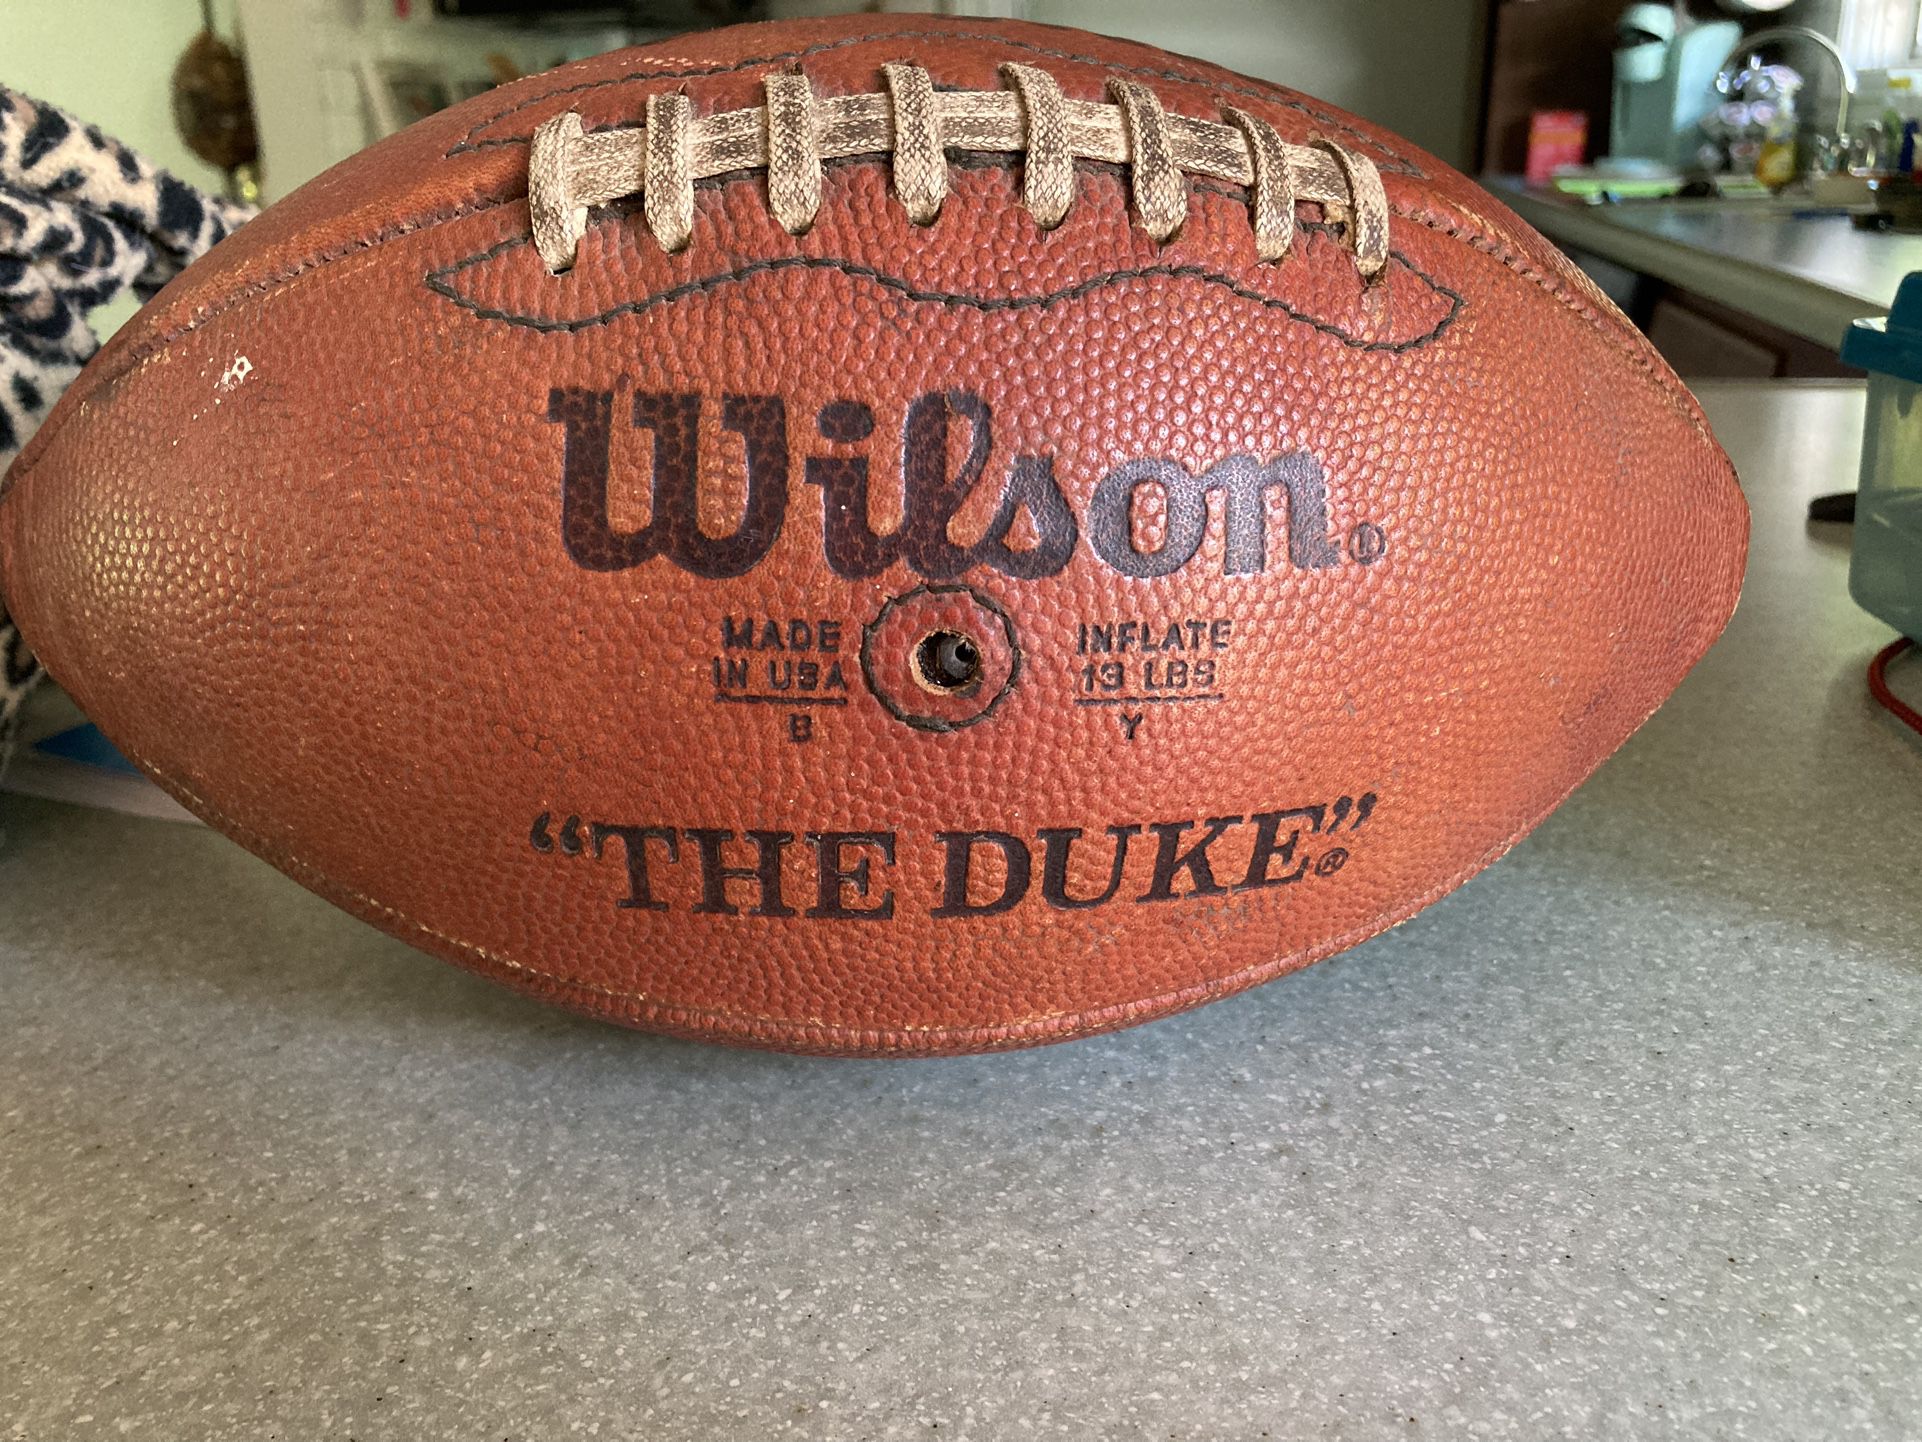 Vintage Wilson “The Duke”  Football